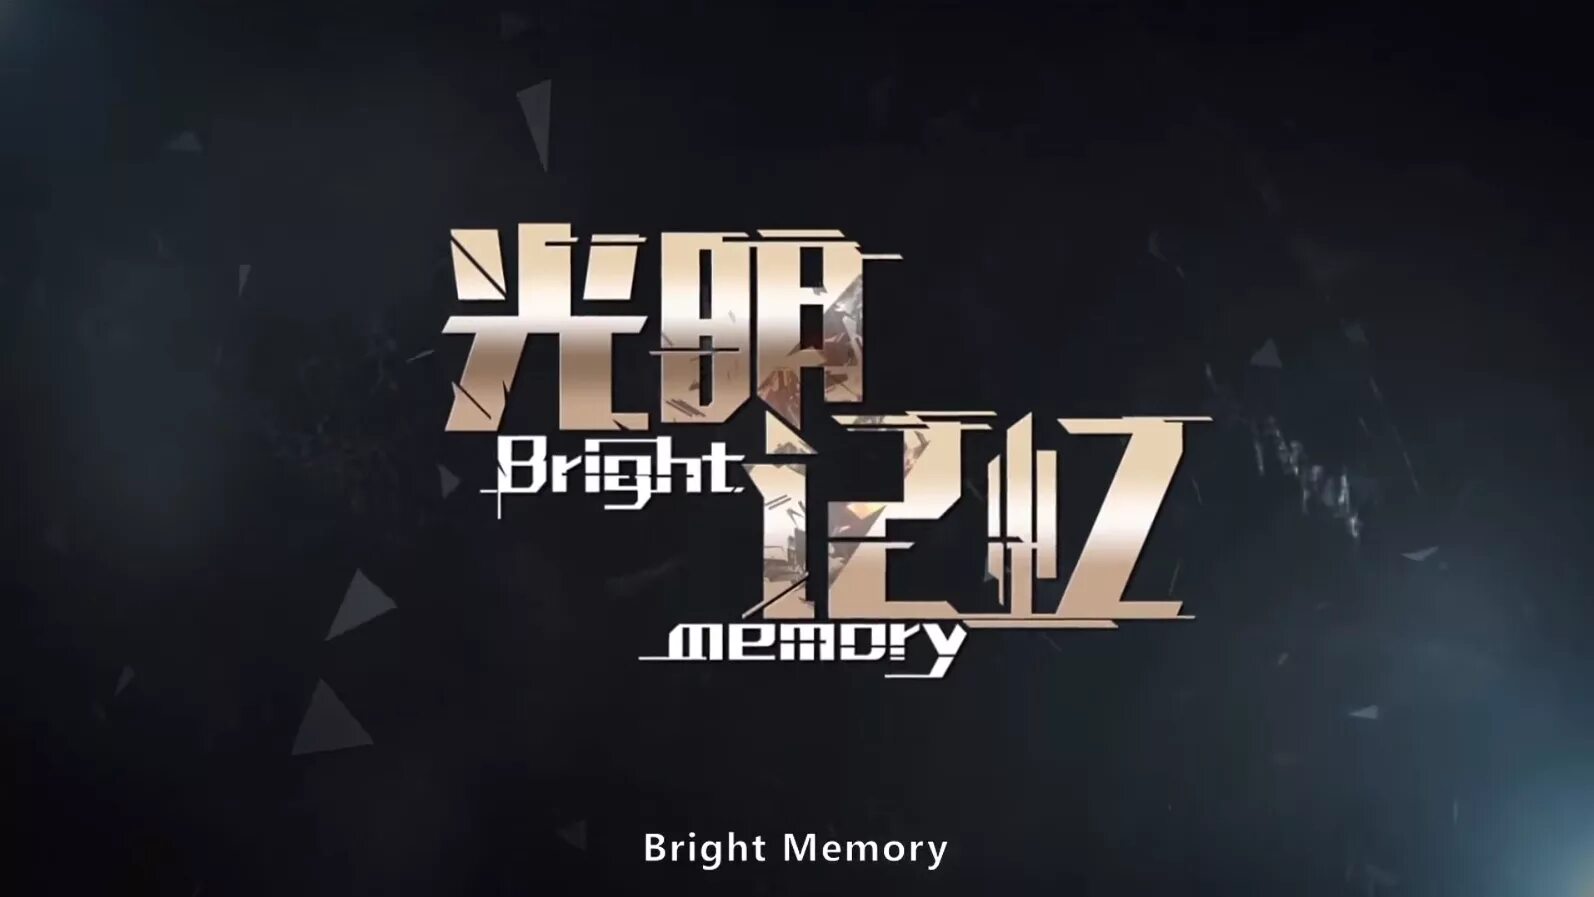 Брайт мемори. Bright Memory. Bright Memory: Infinite. Bright Memory обложка. Bright Memory Memori.